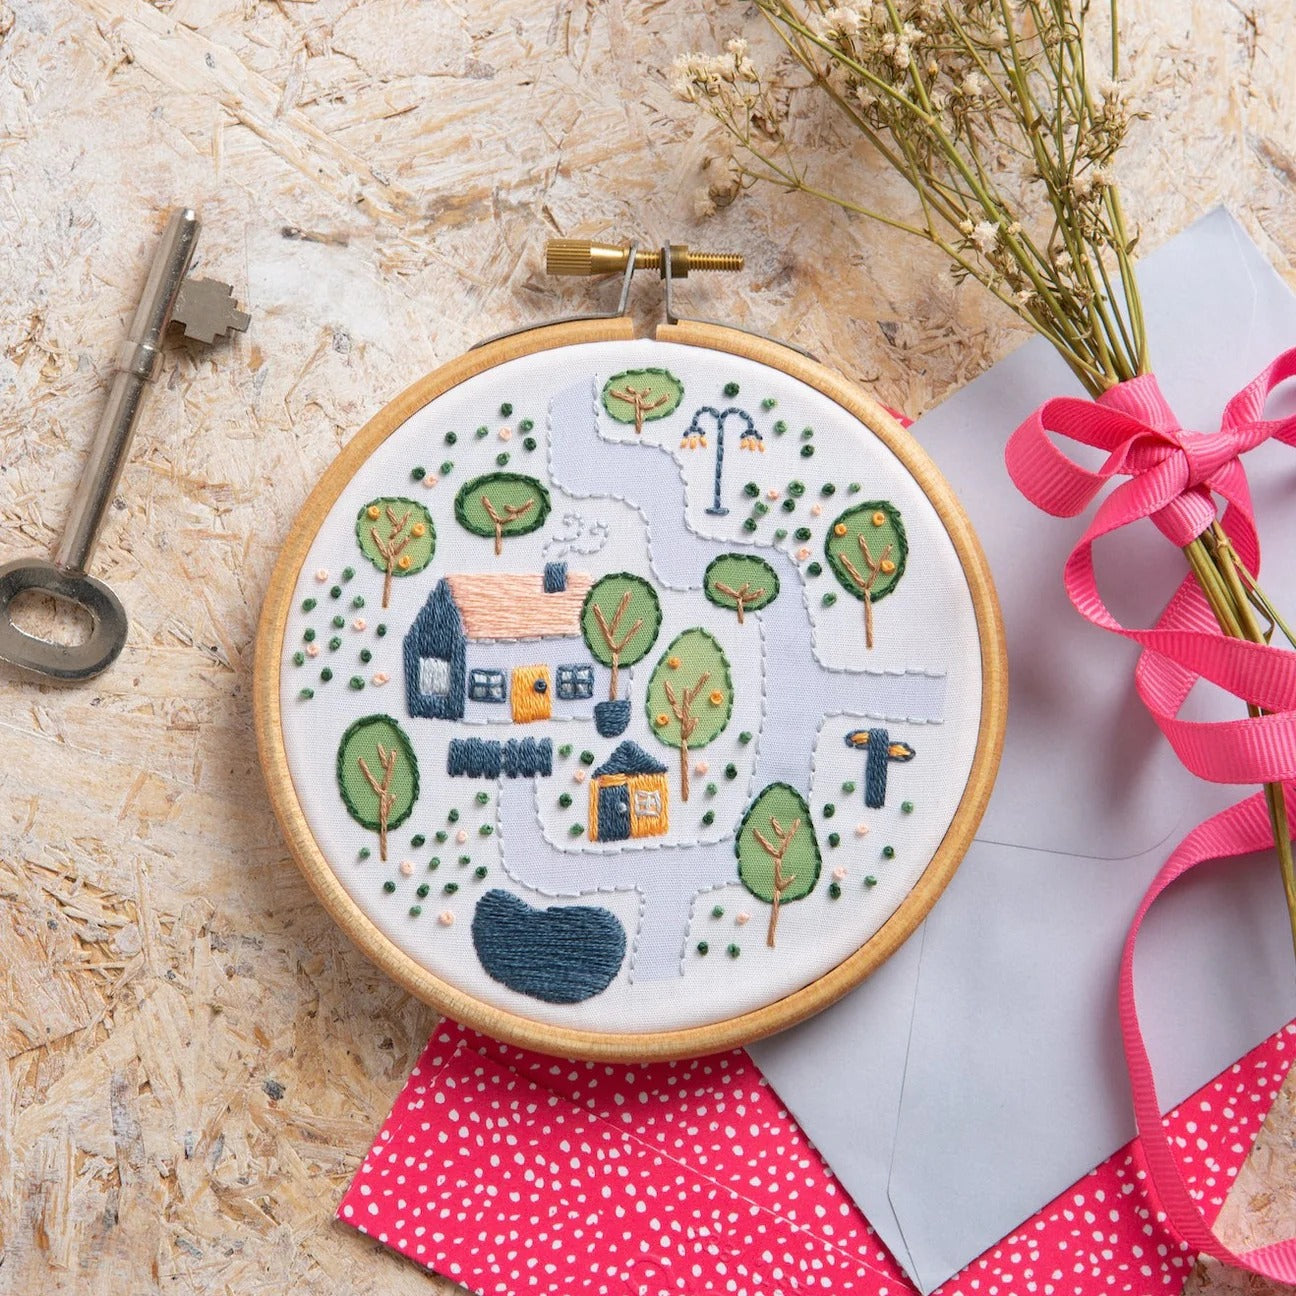 Town Houses Mini Embroidery Kit - Hawthorn Handmade - Embroidery Kit